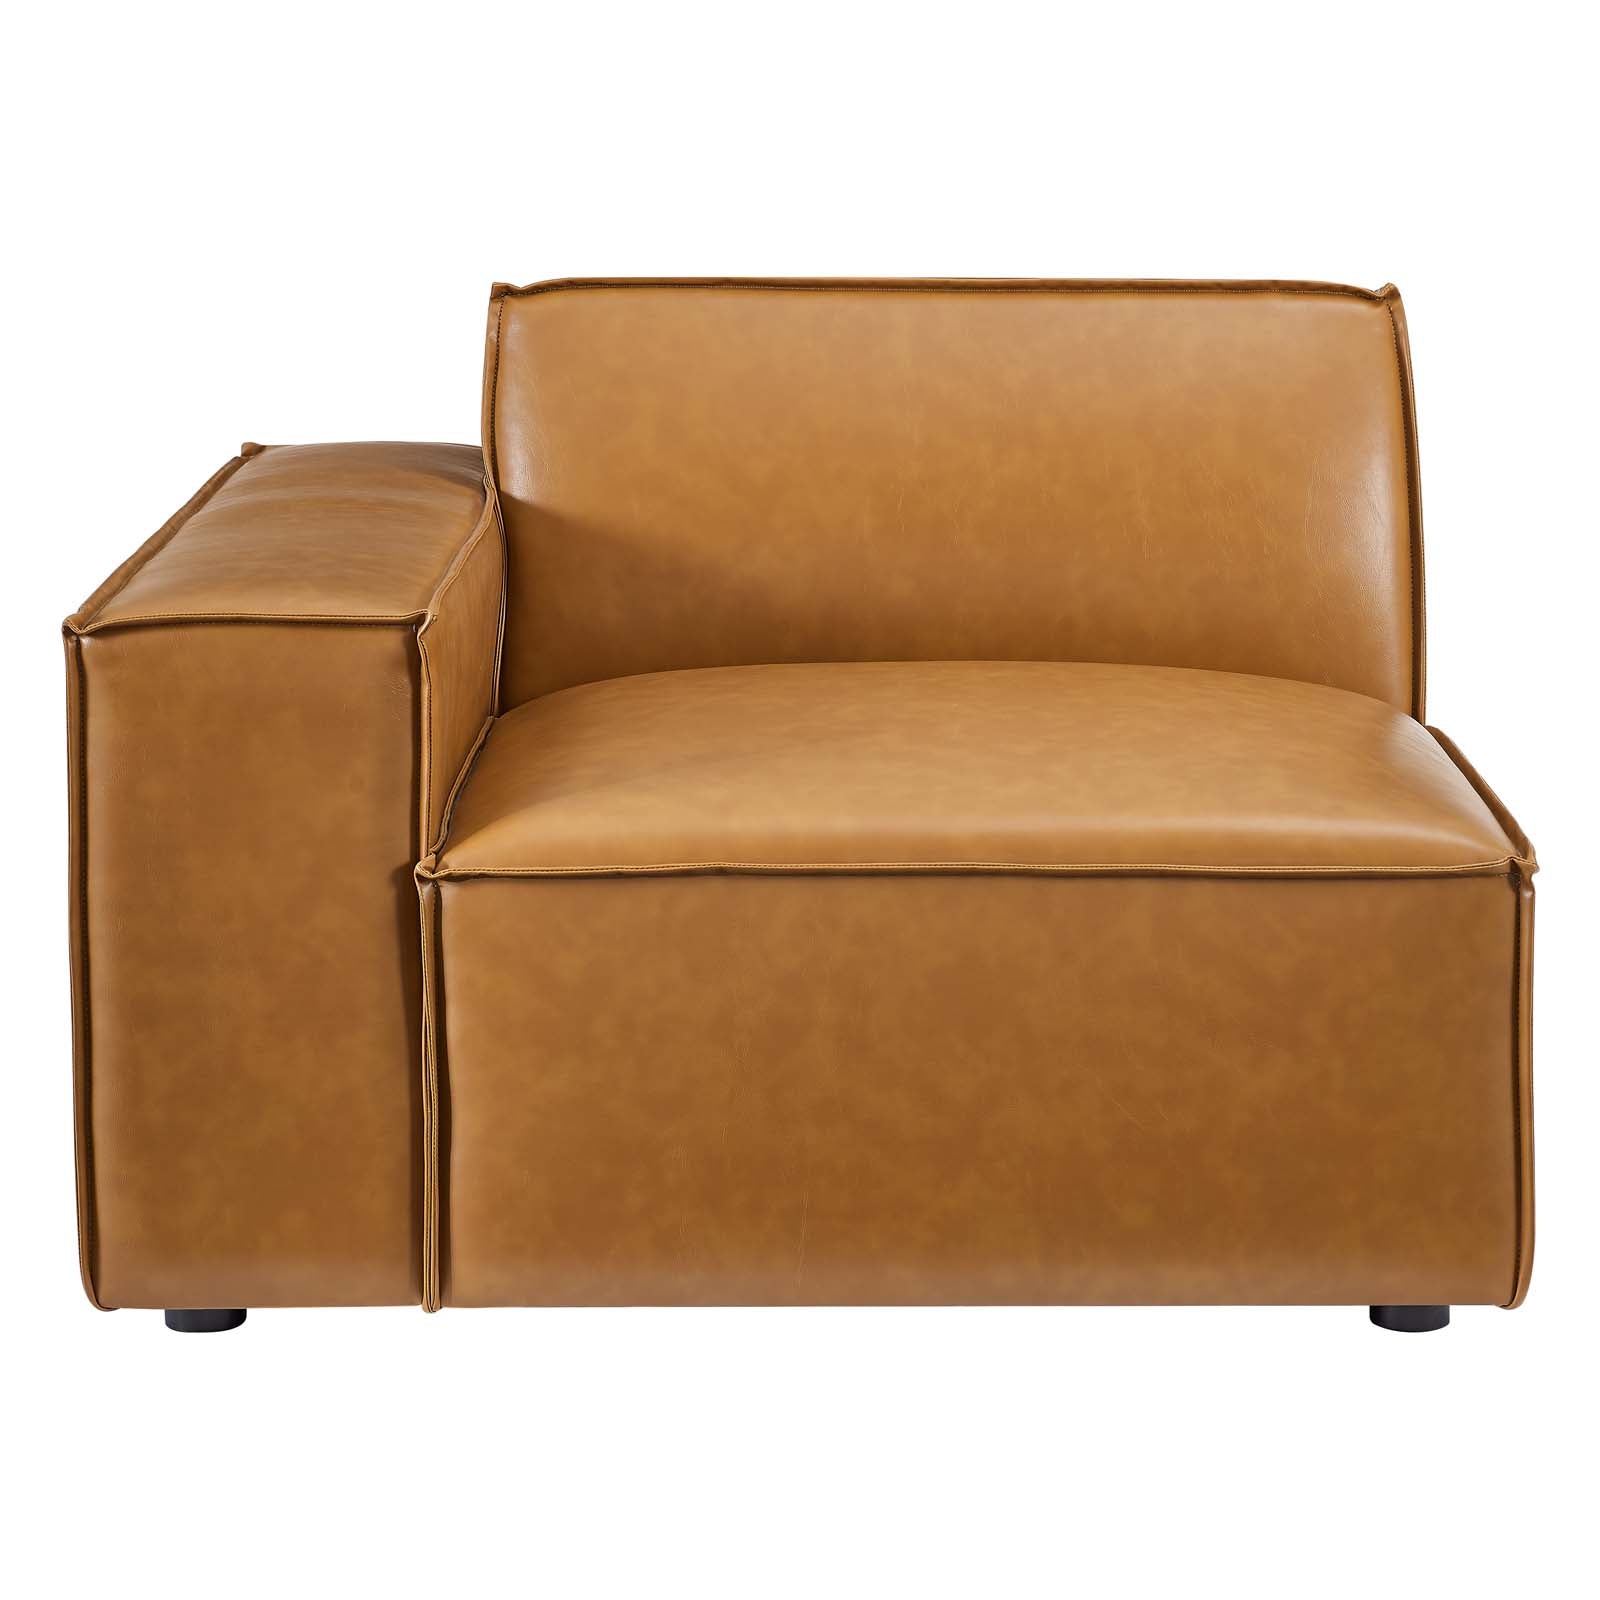 Restore 5-Piece Vegan Leather Sectional Sofa